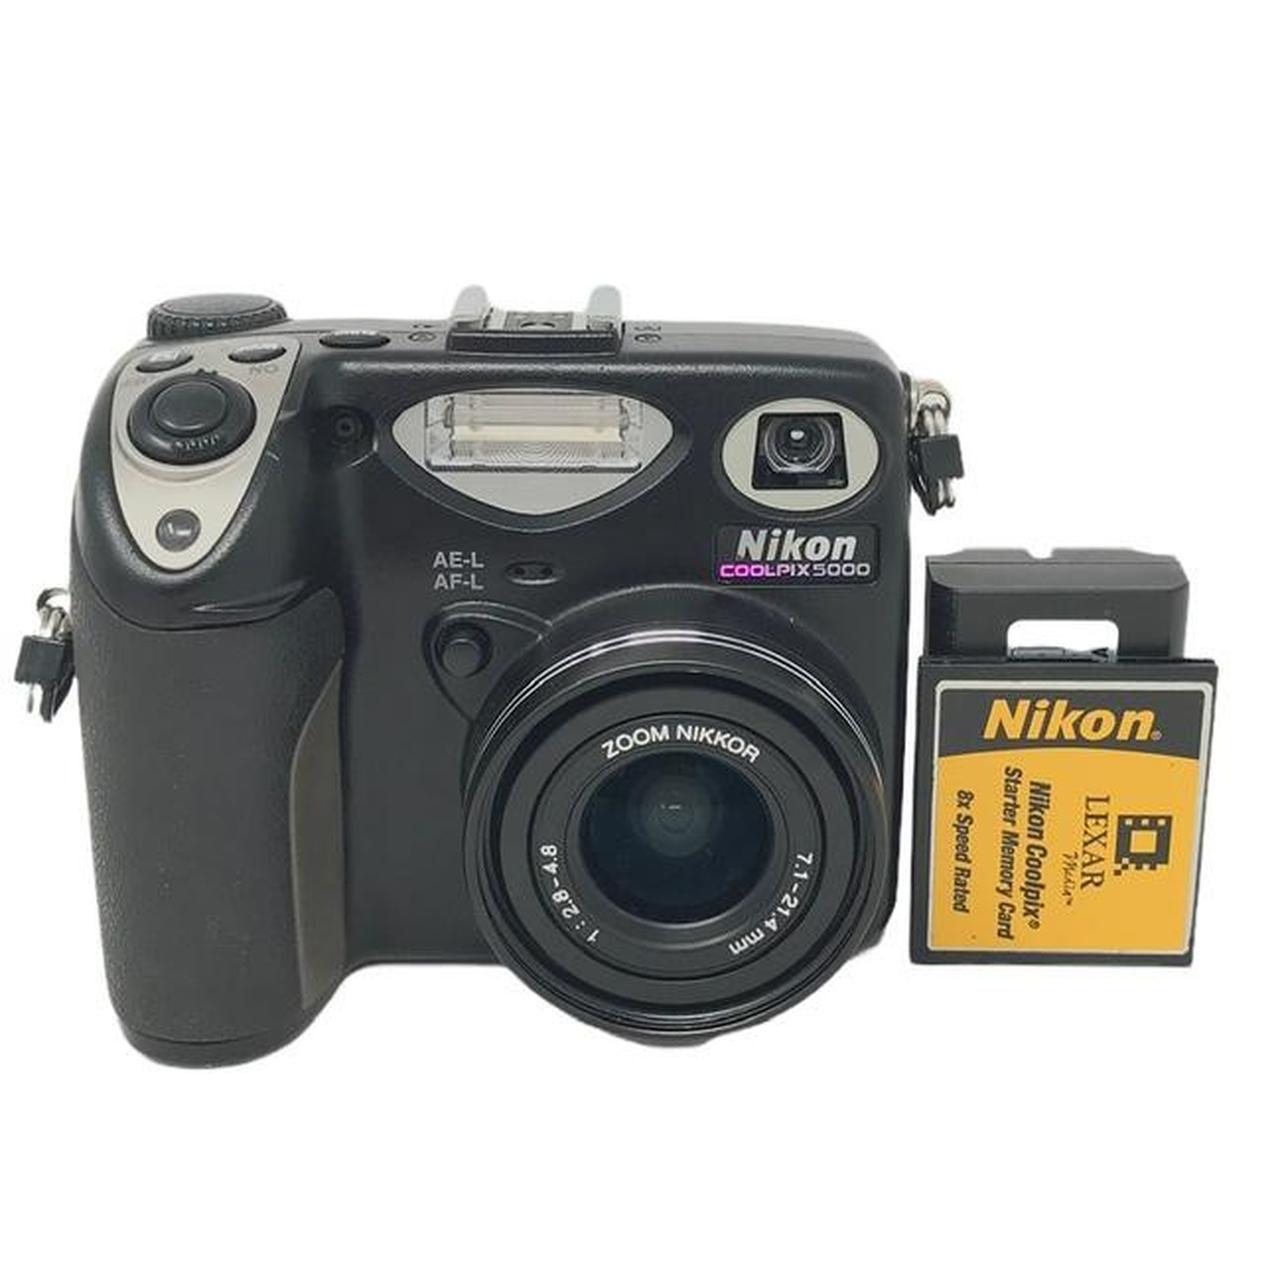 Product Image 1 - Nikon Coolpix 5000 Digital Camera

Comes